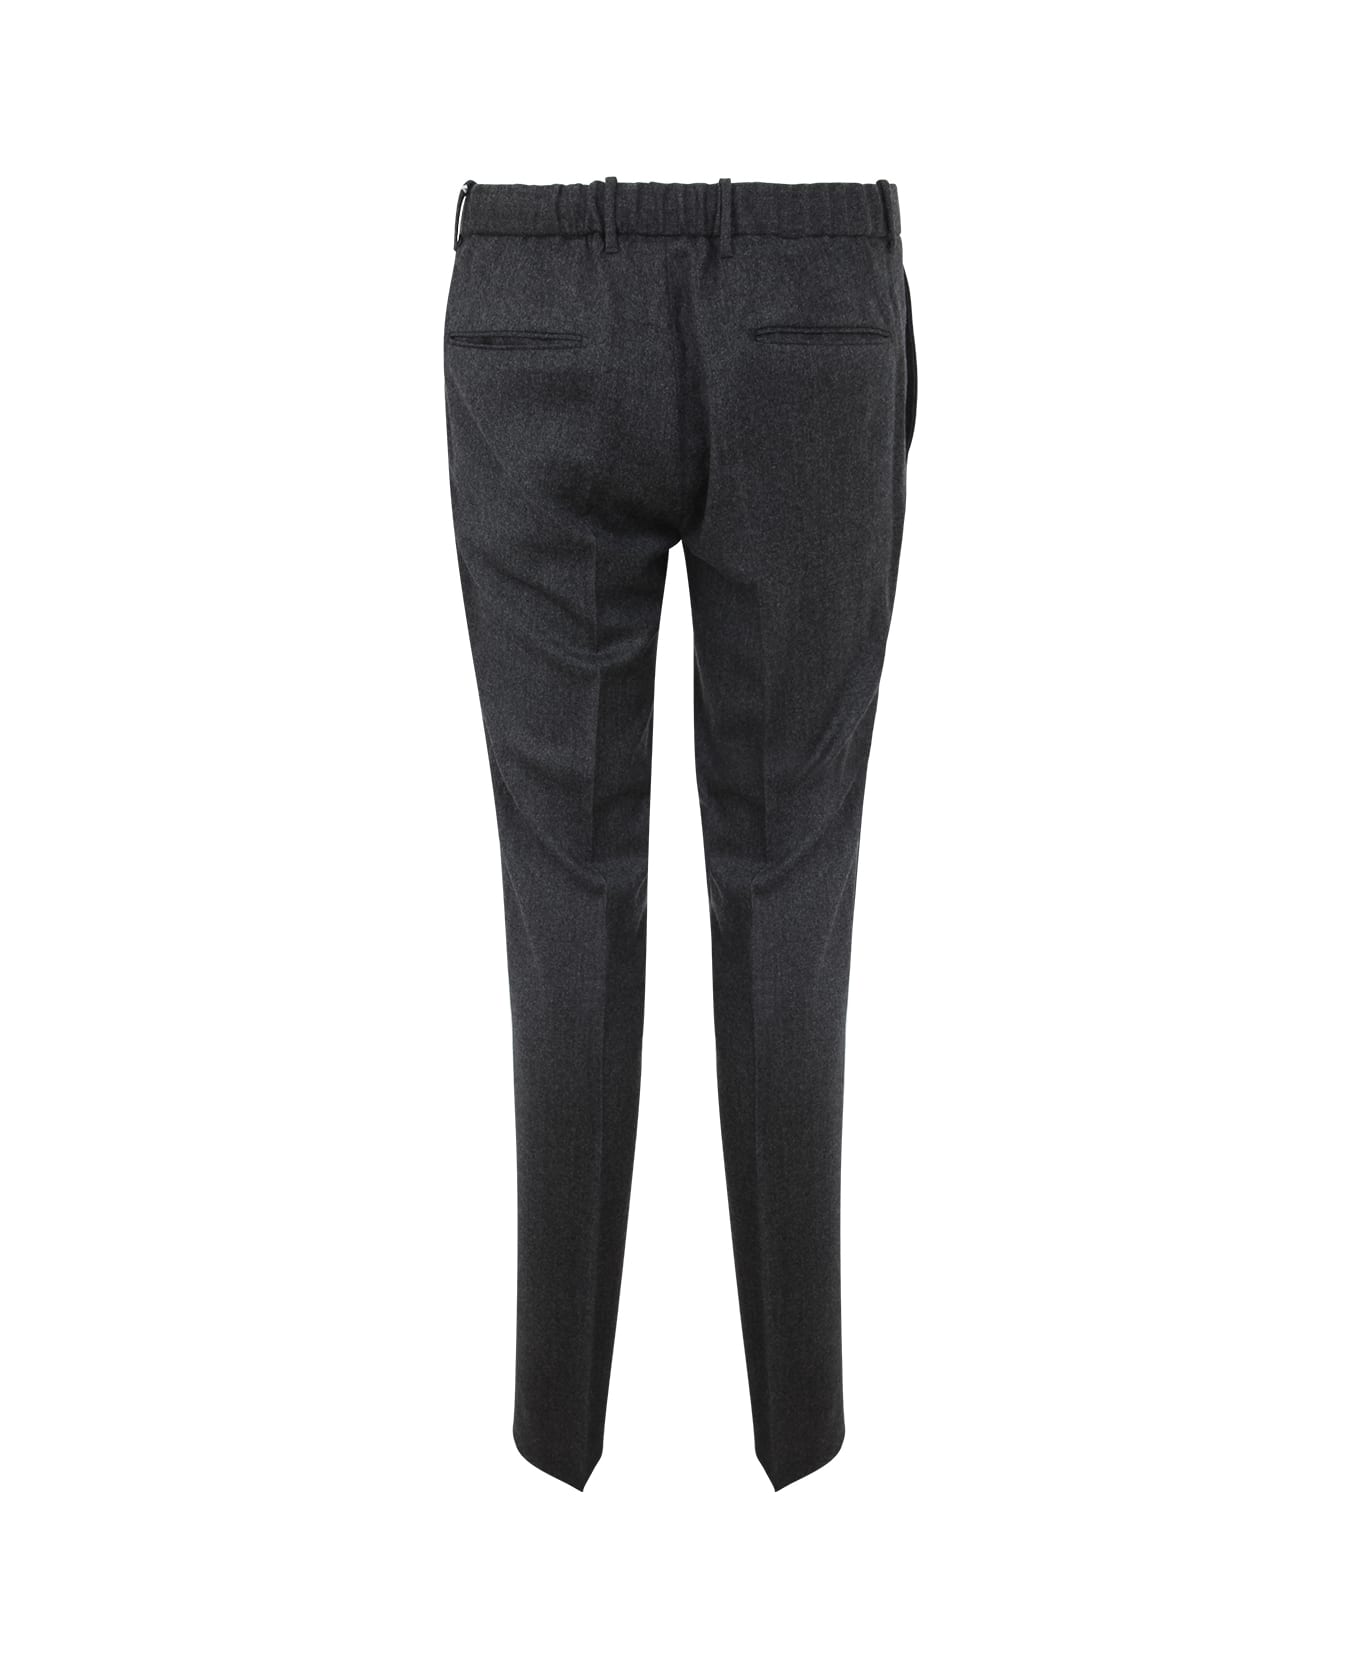 Incotex Smart Flannel Trousers - Medium Grey ボトムス